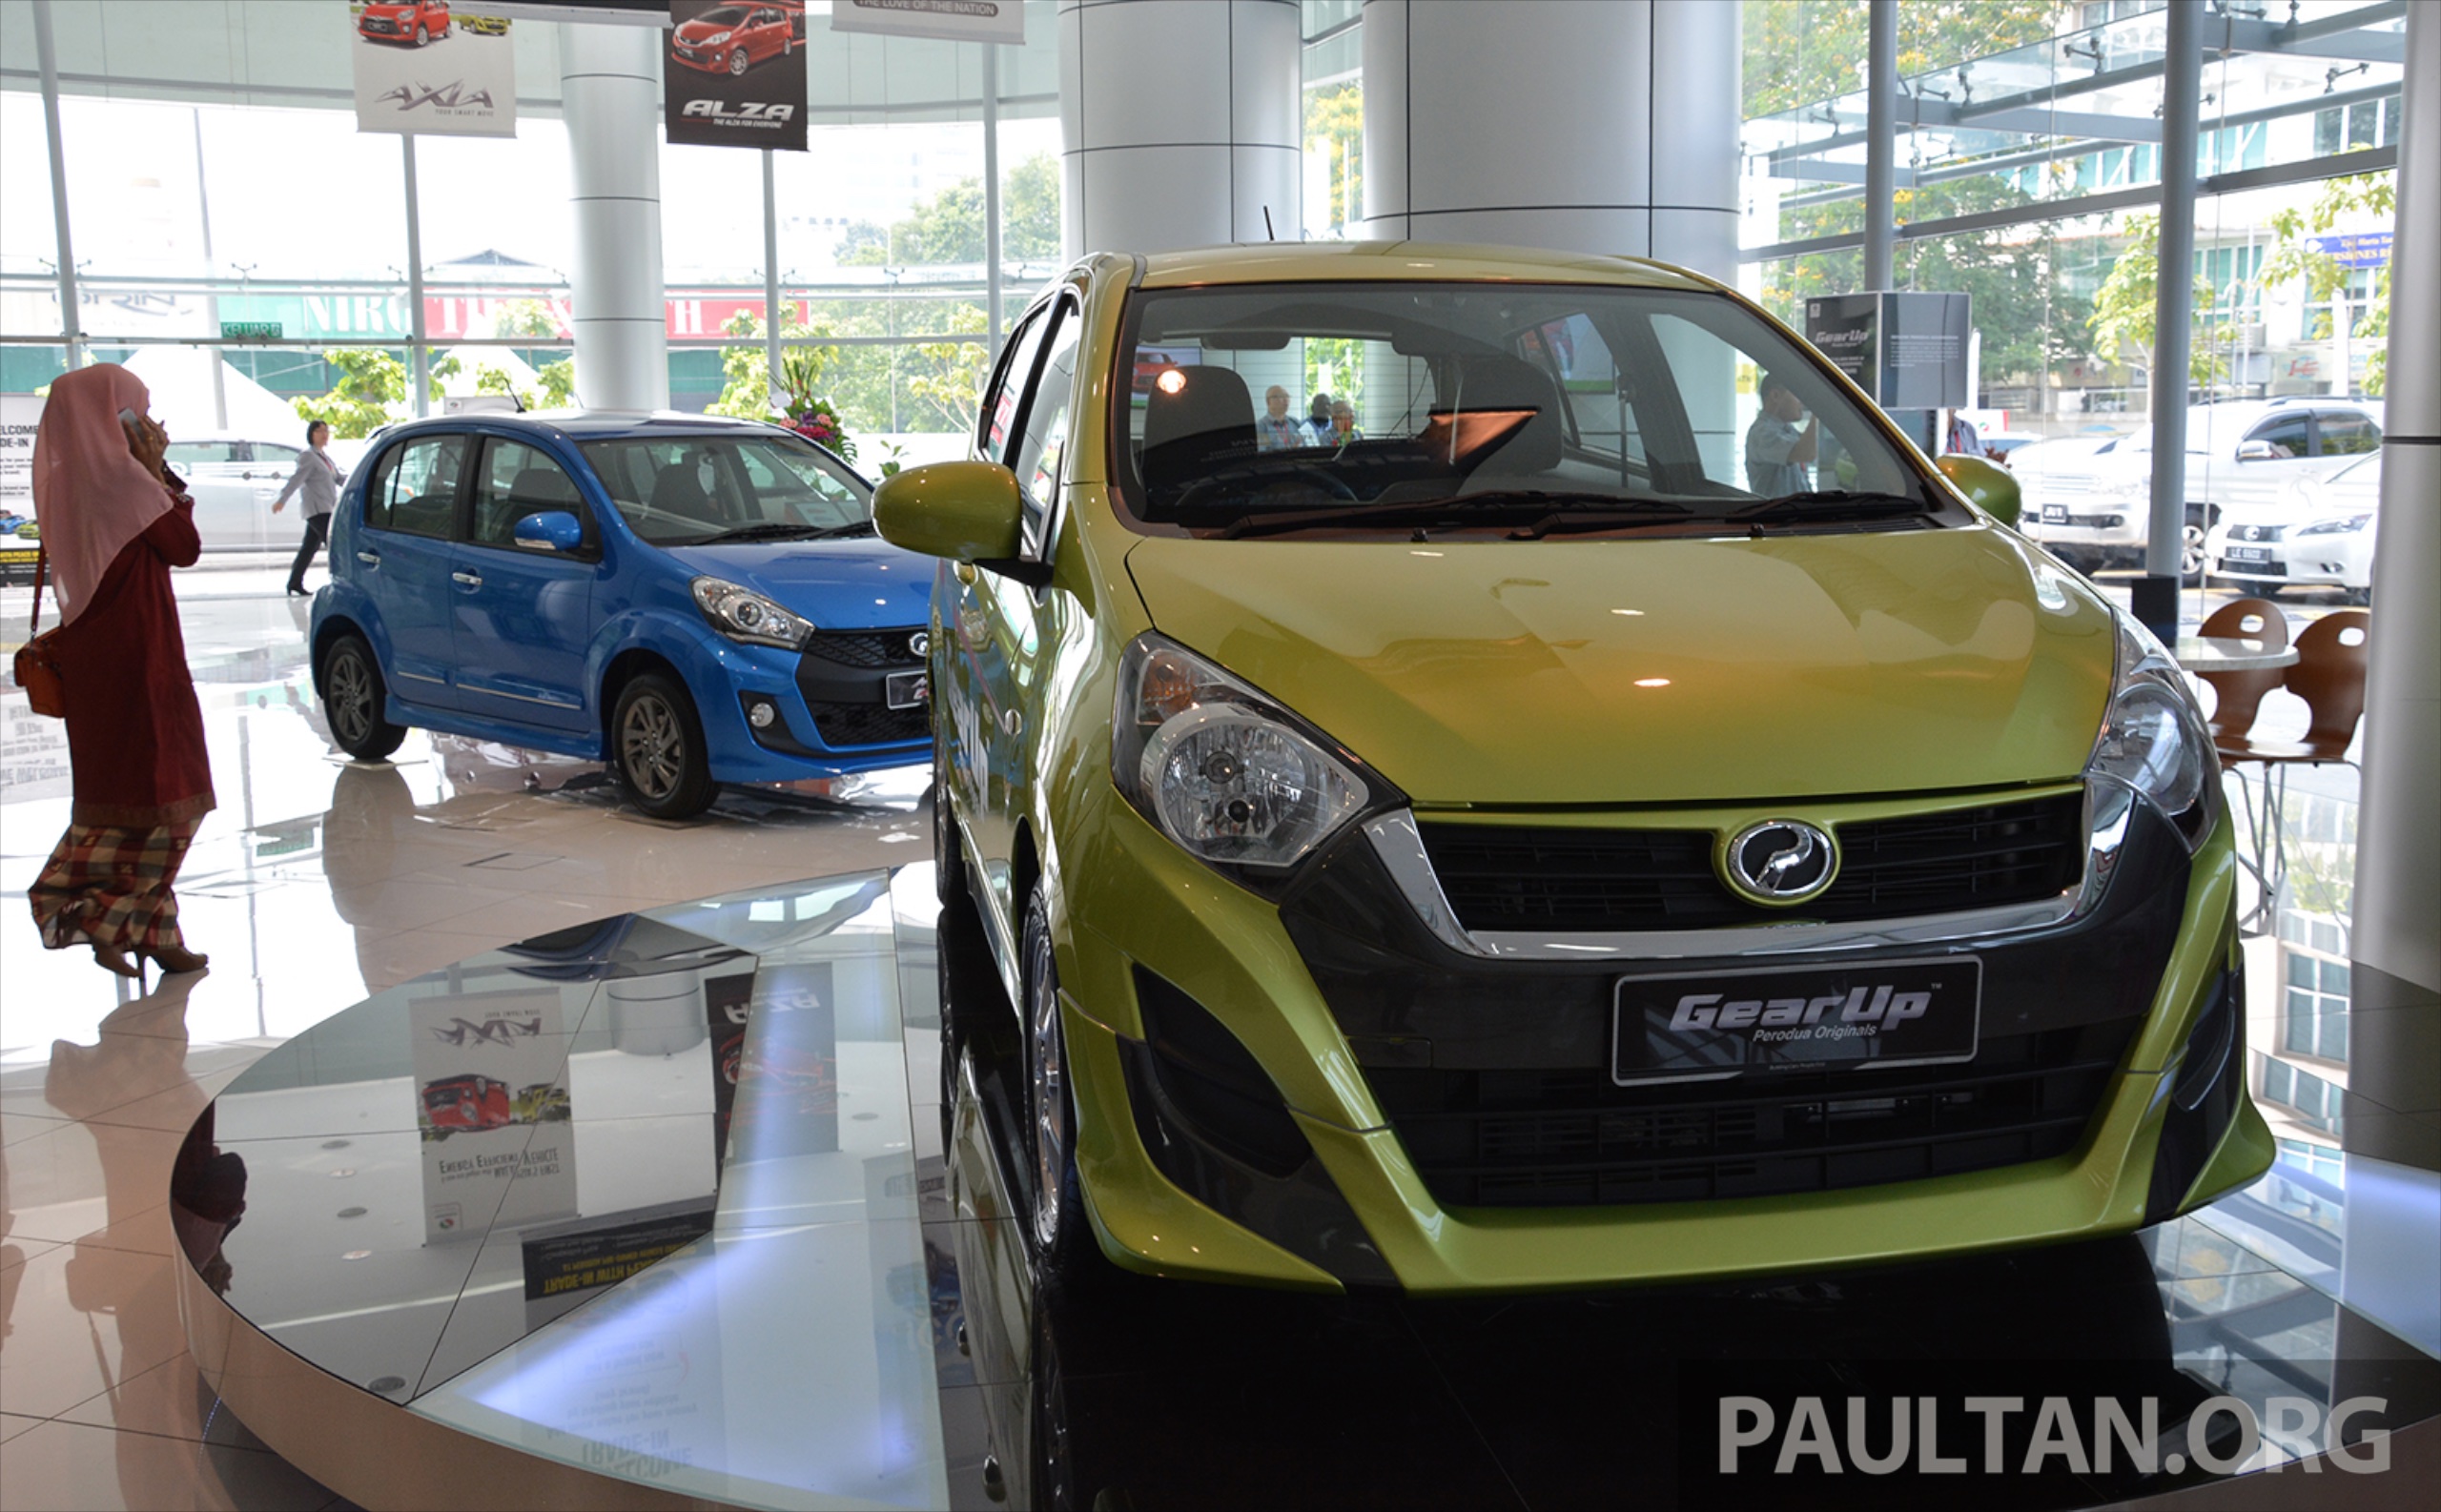 Perodua Sentral Pj 9 Paul Tan S Automotive News